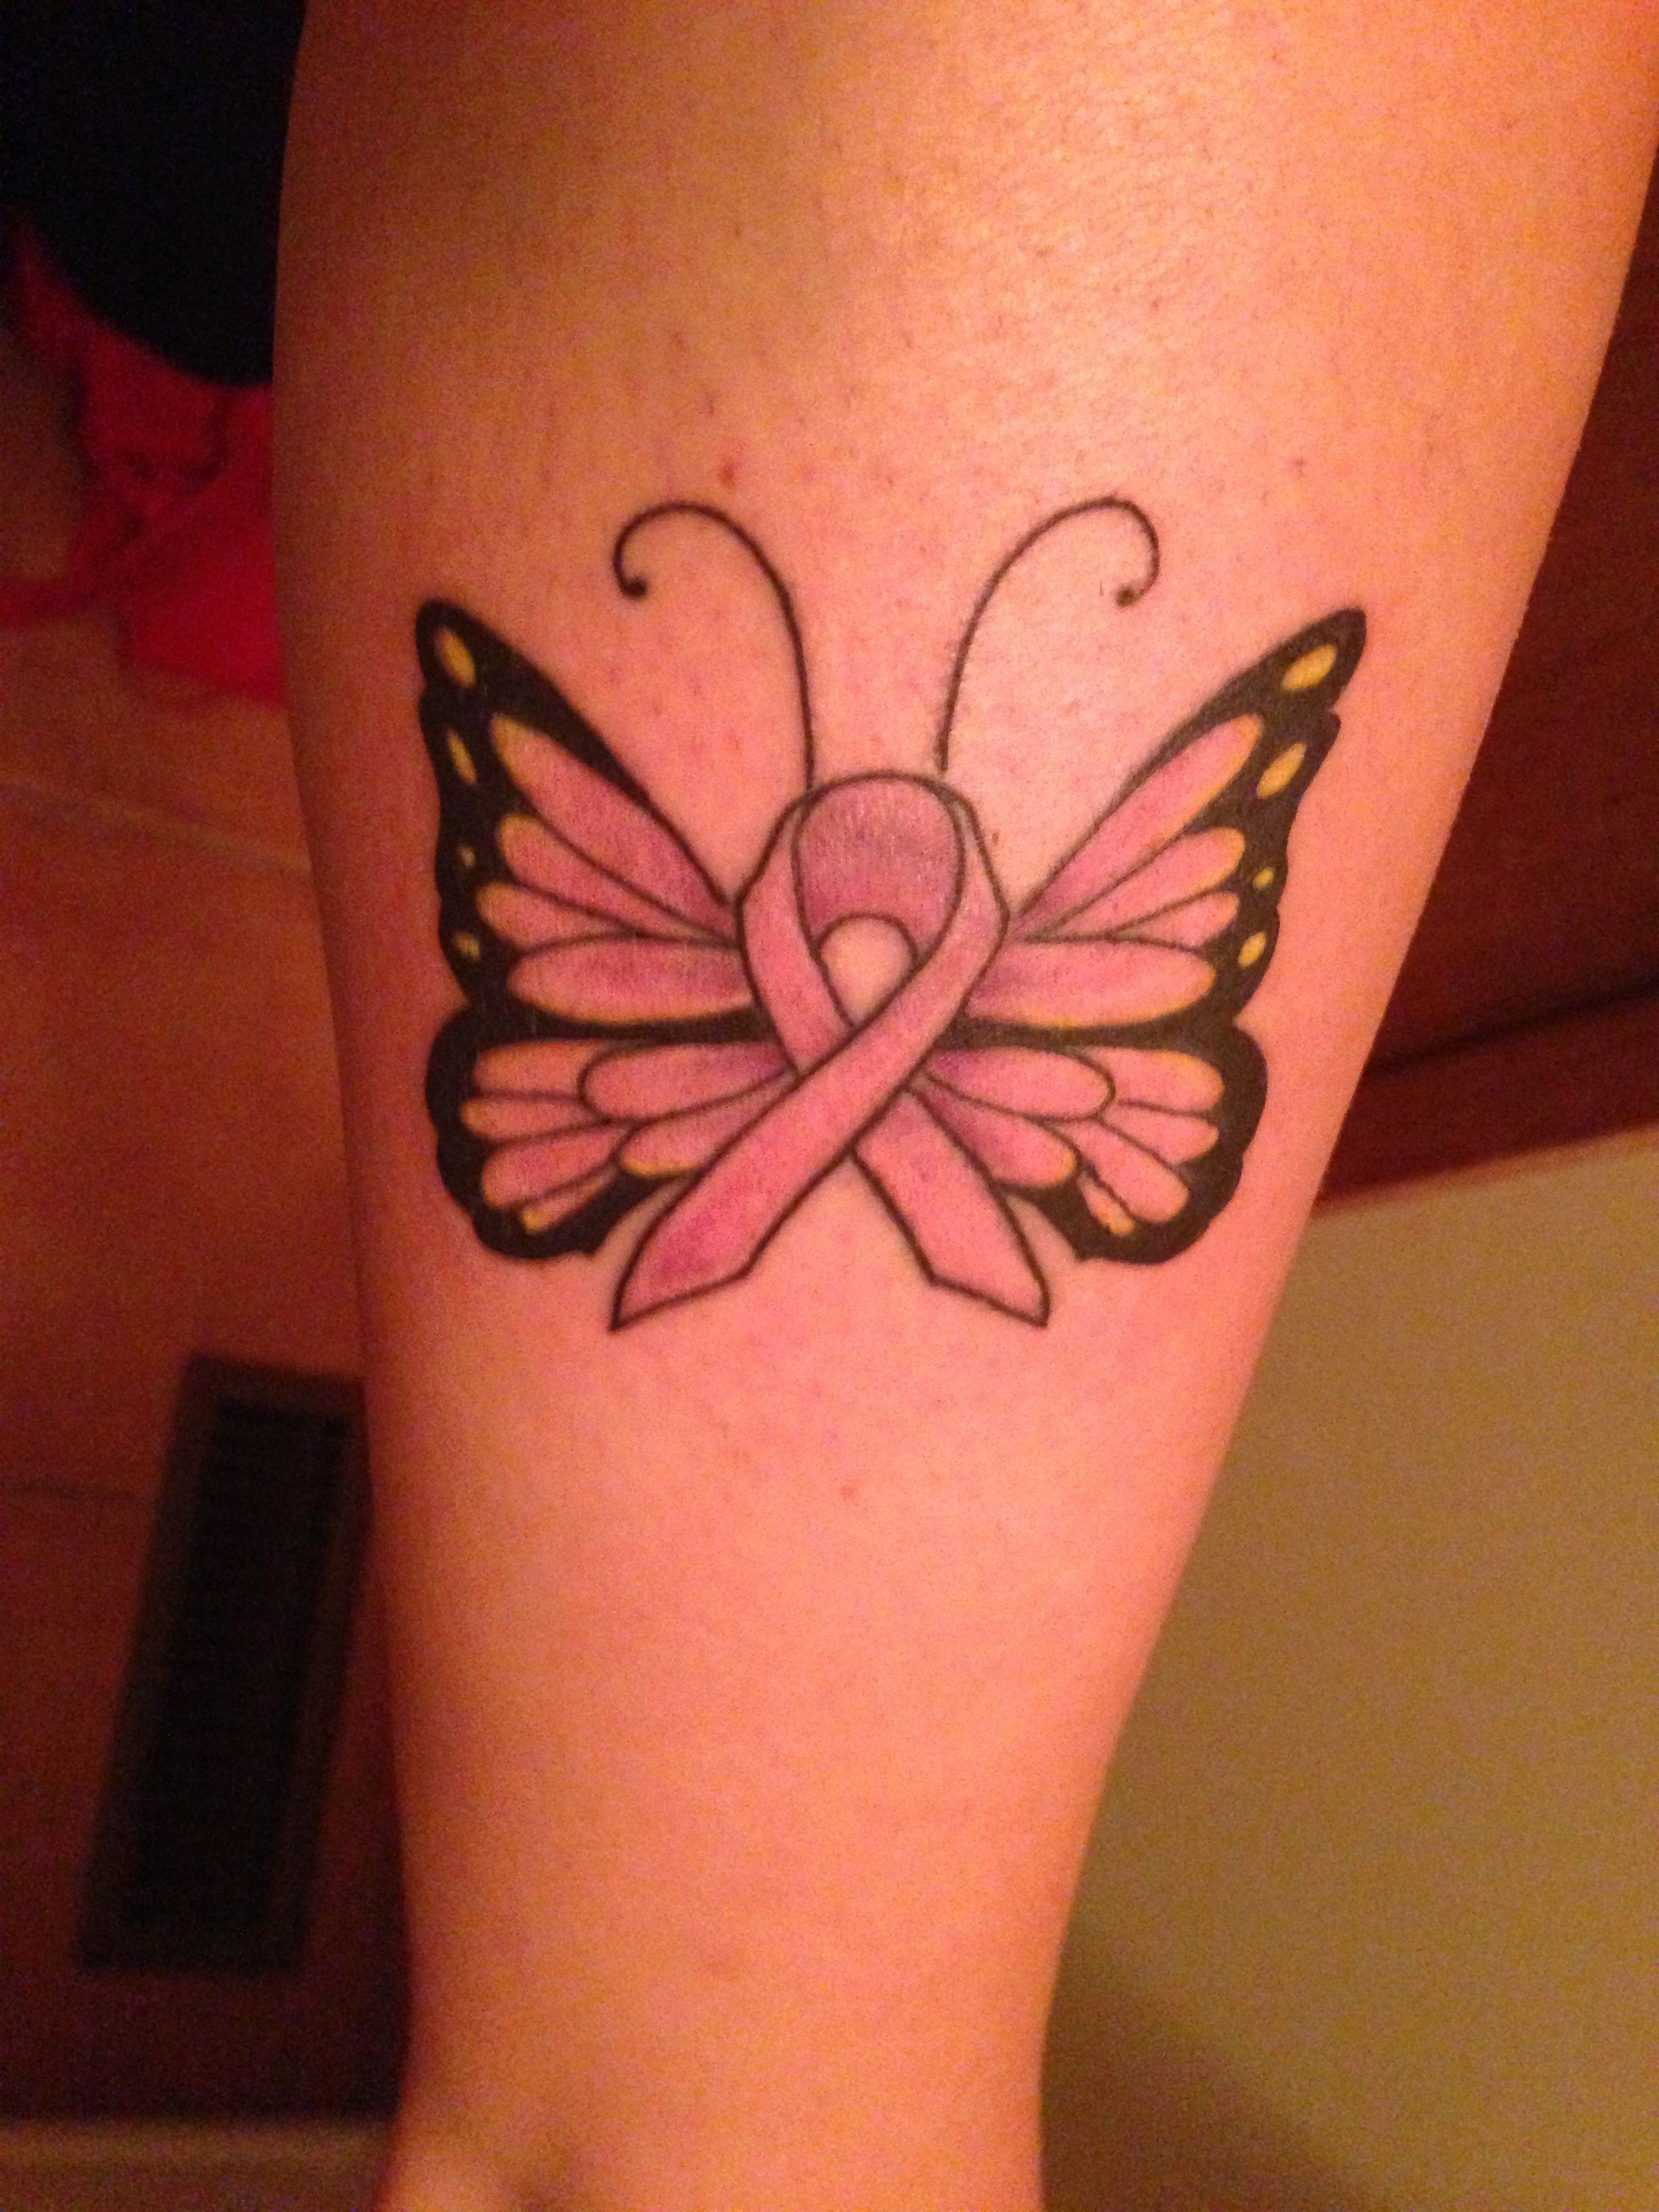 Breast Cancer Butterfly Tattoo Cute Small Tattoos Breast Cancer regarding dimensions 2448 X 3264